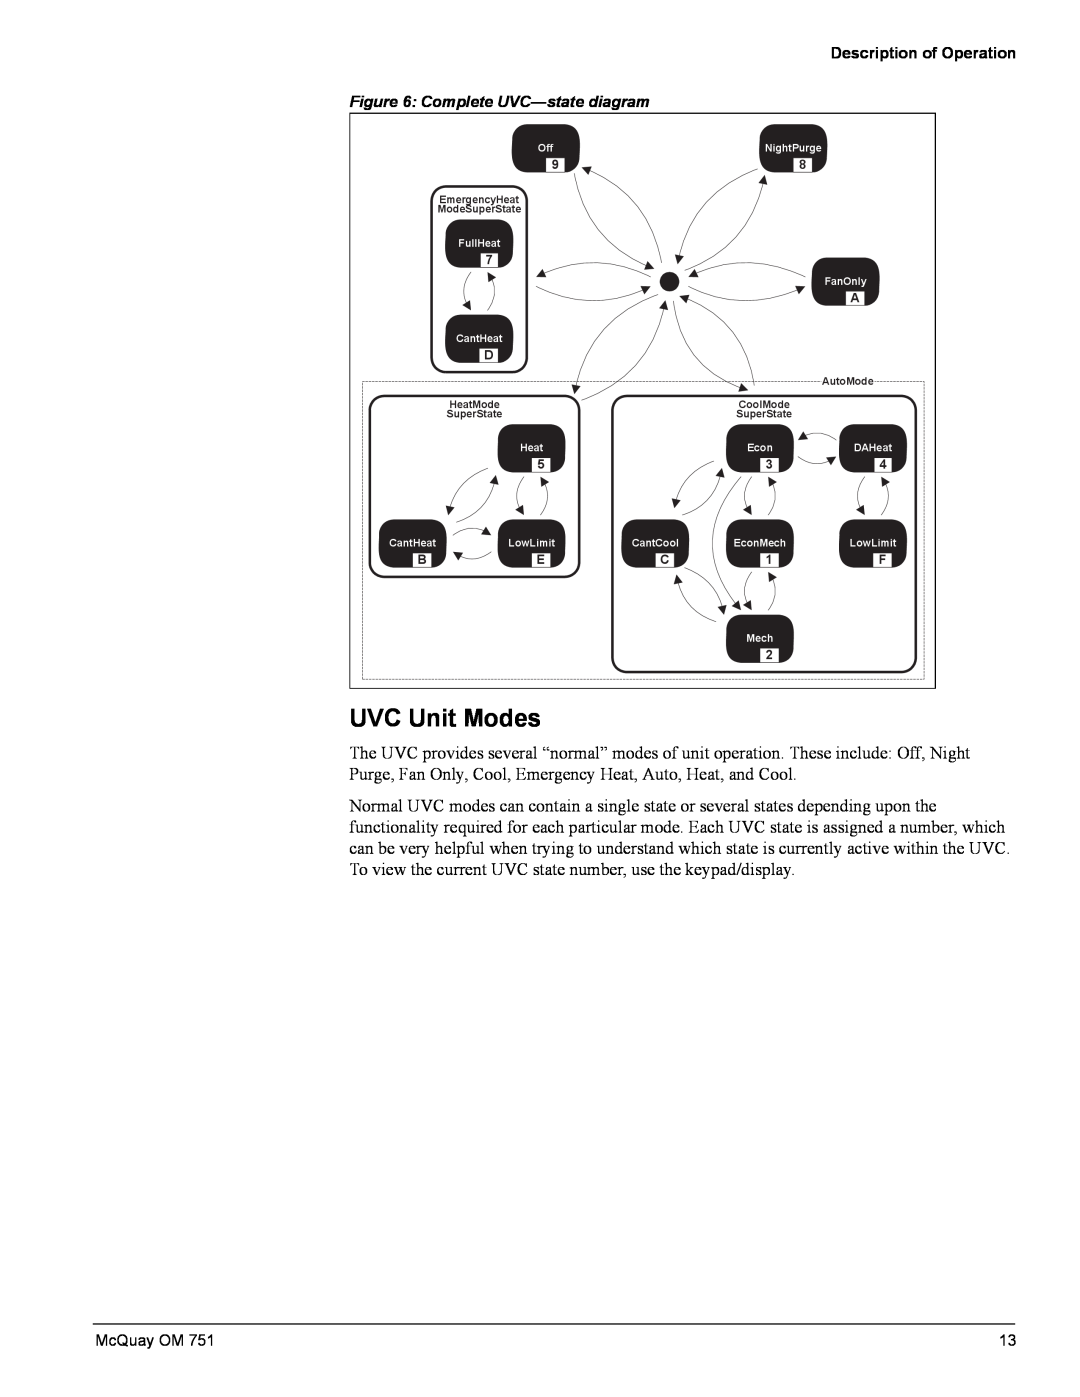 American Standard UV05 manual UVC Unit Modes, Complete UVC-statediagram 